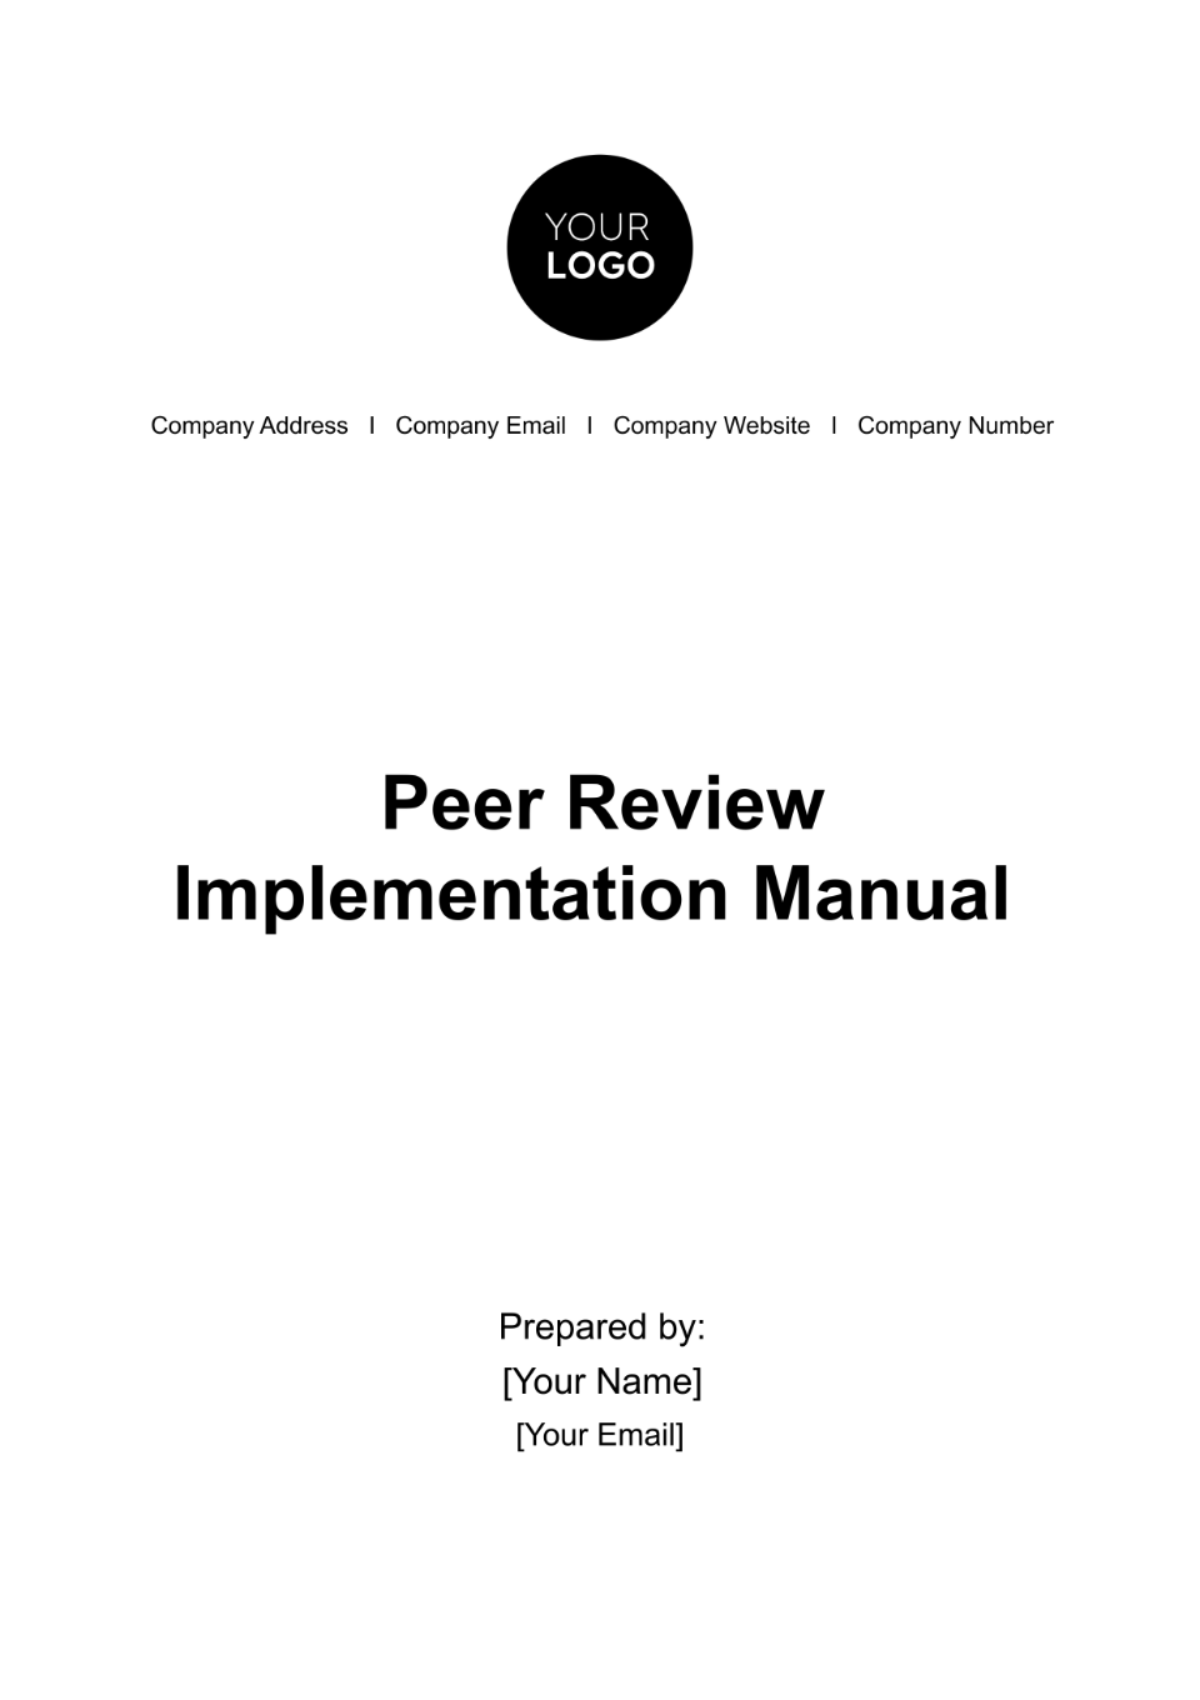 Free Peer Review Implementation Manual HR Template